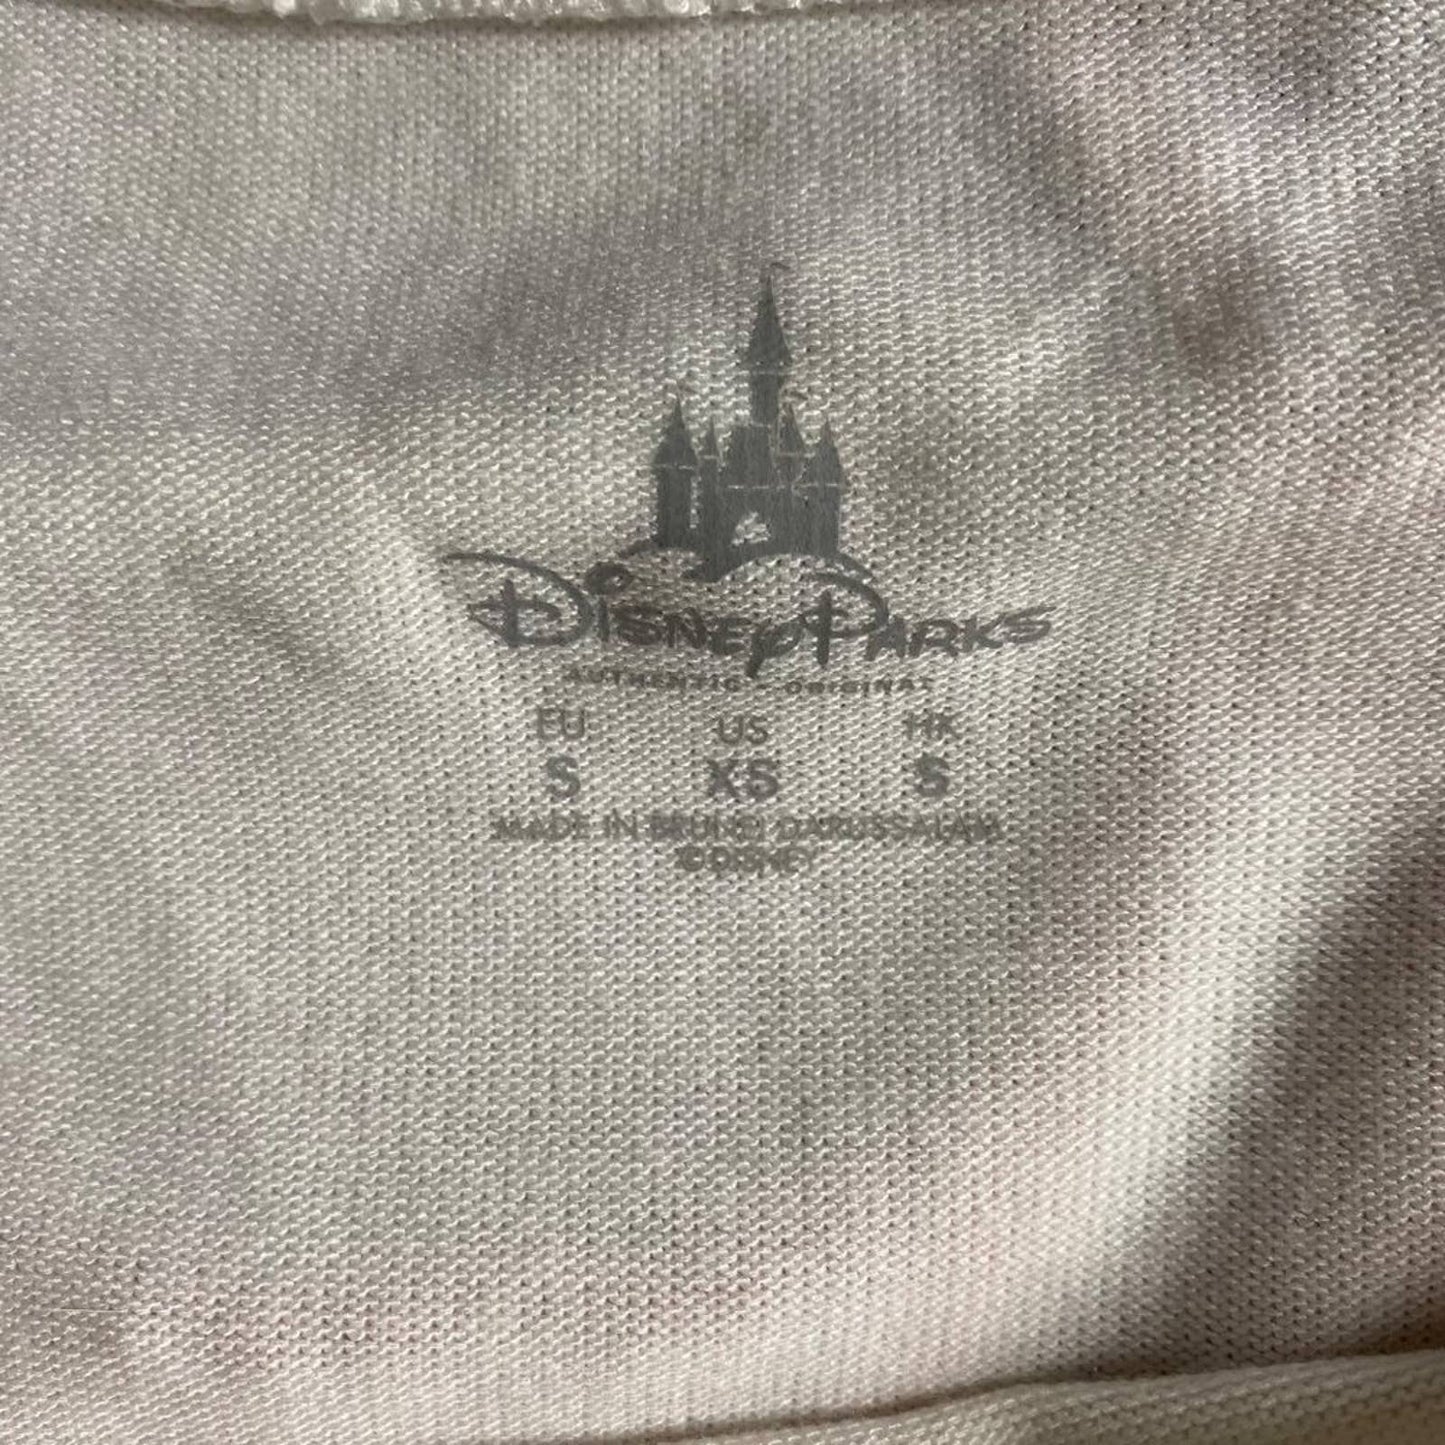 Disney Park sz XS mickey mouse snowflake T-shirt